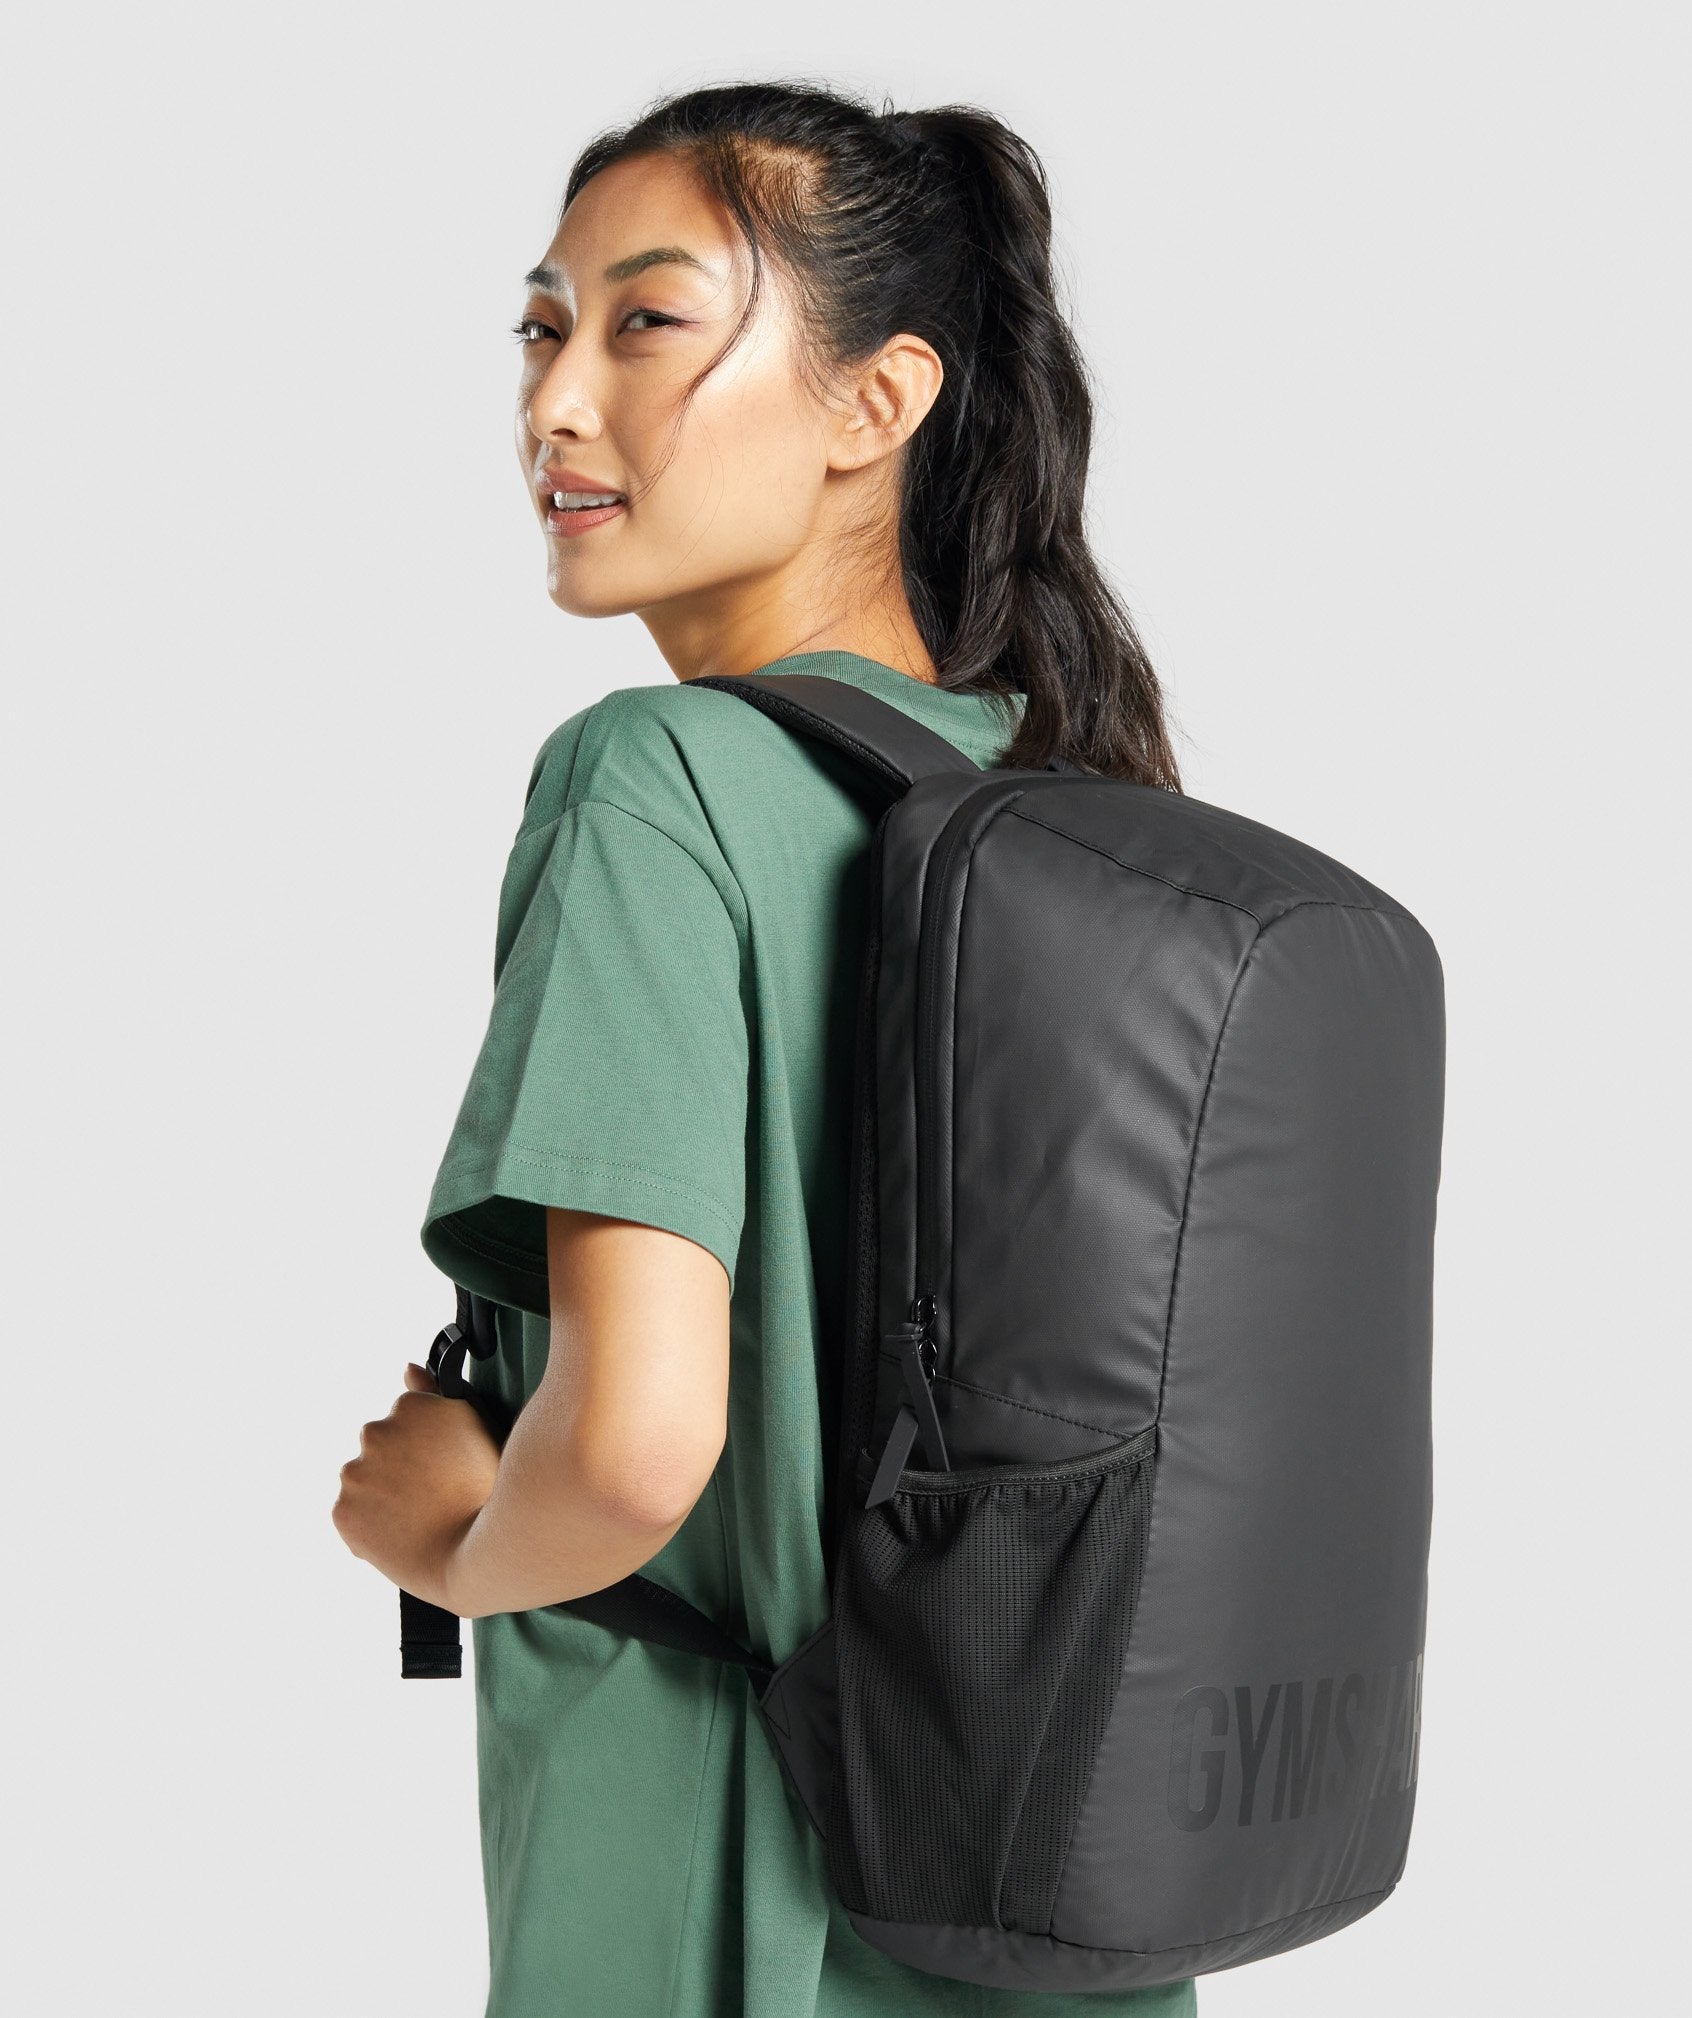 X-Series Backpack 0.1 in Black - view 5